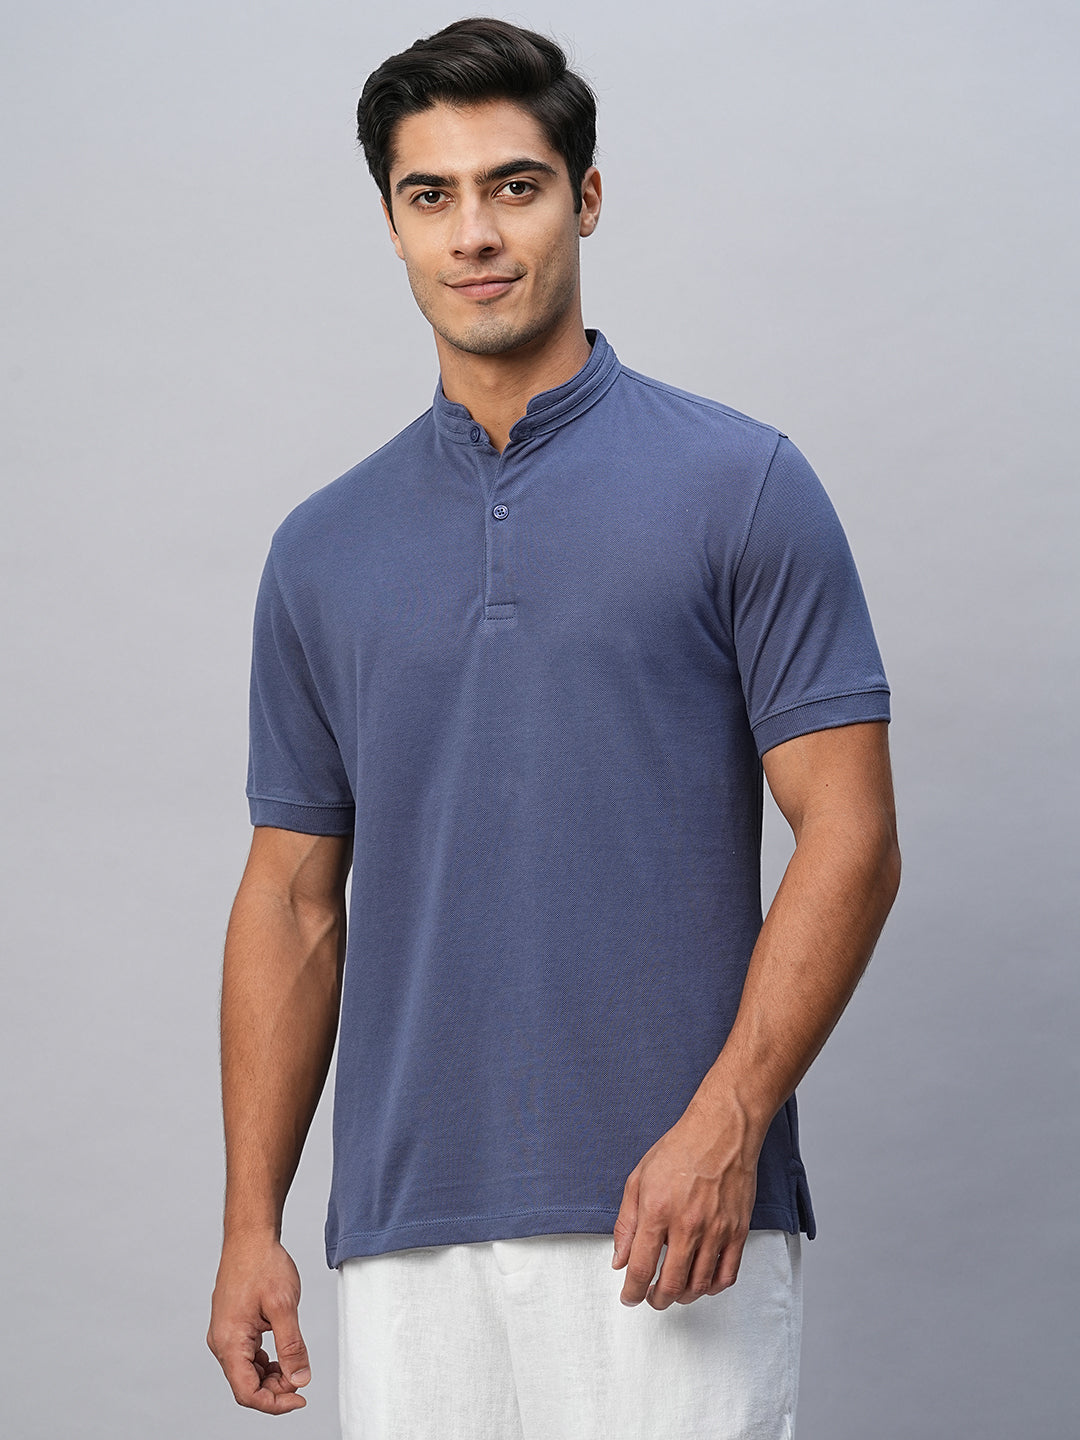 Men's Blue Cotton Regular Fit Tshirts